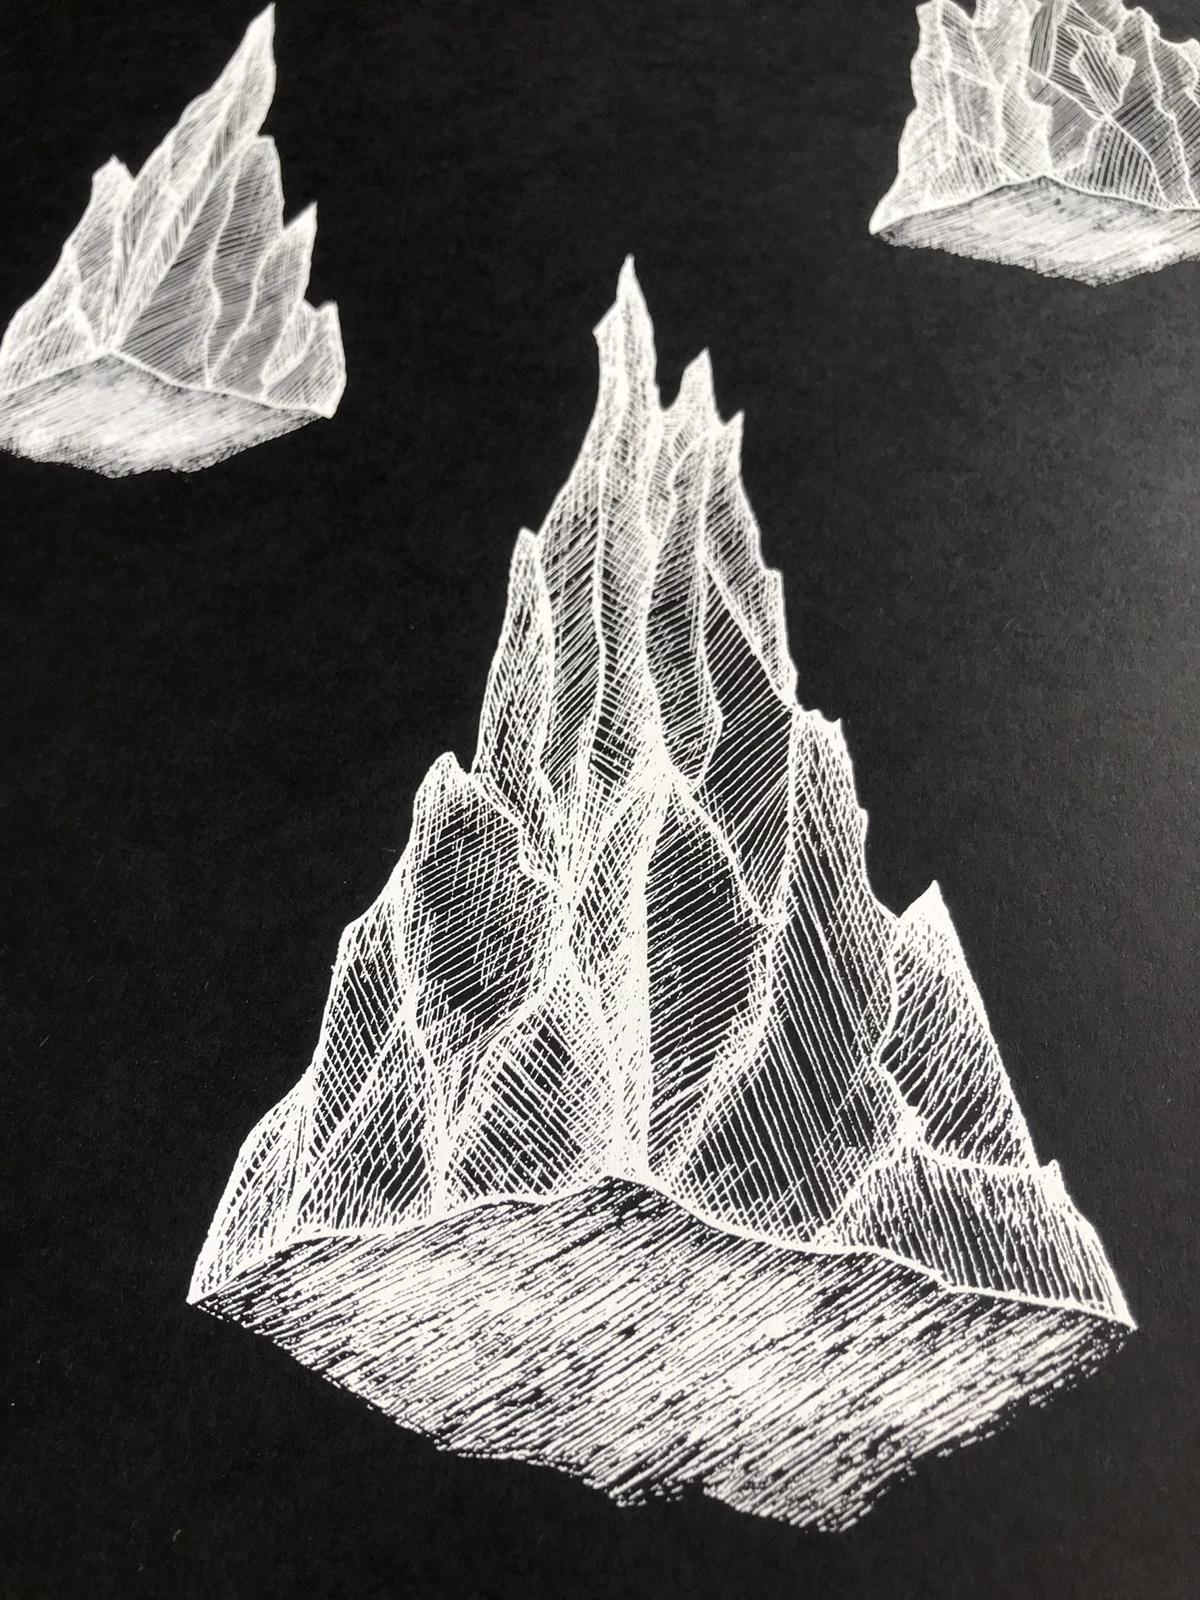 Rachel Anna Davies Illustration - The Floating Mountains  - Haus Nostromo